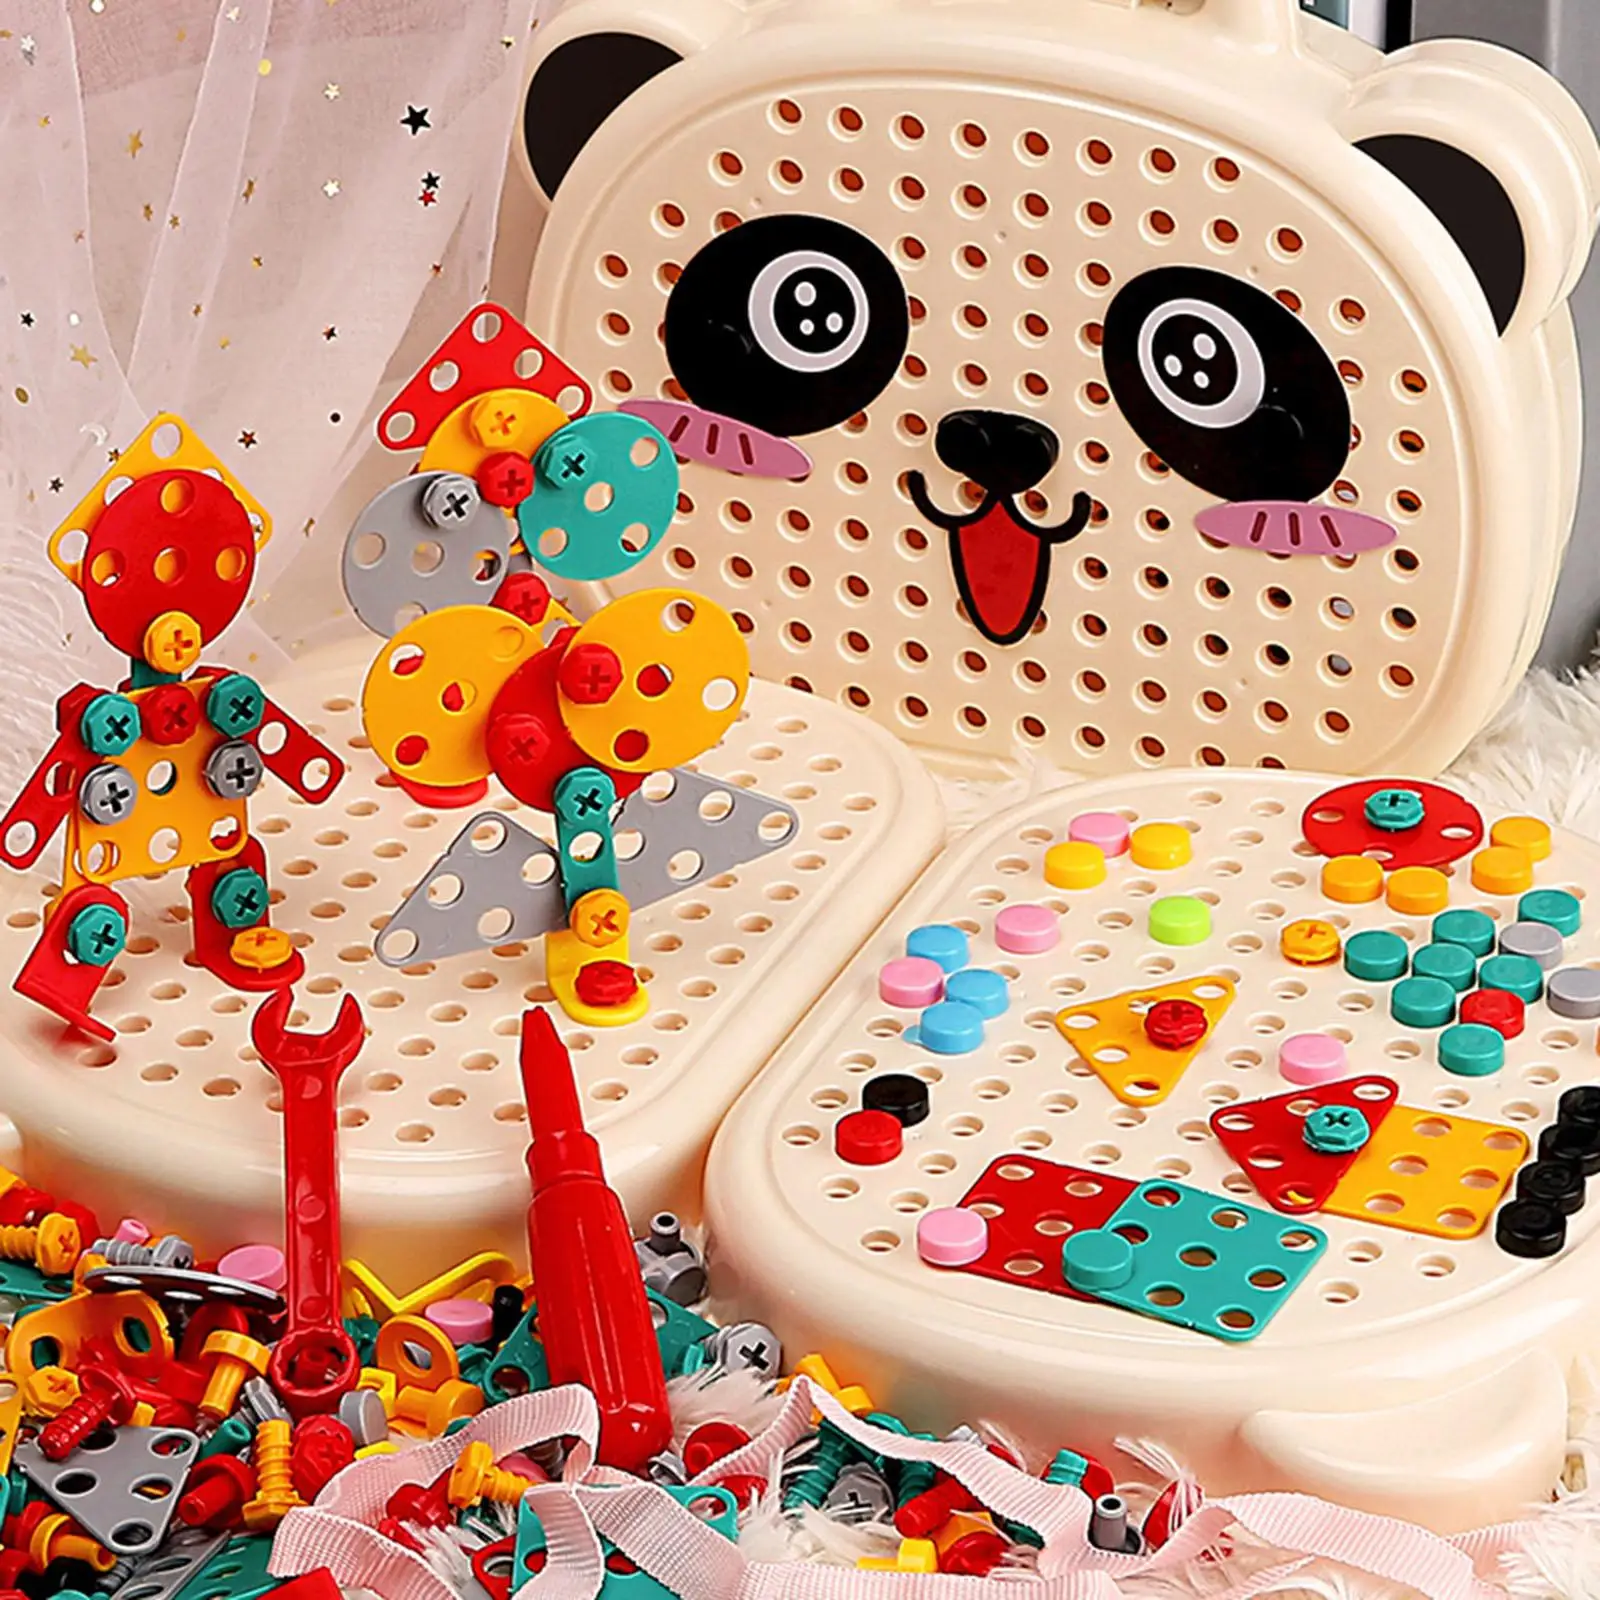 Screw Toys Screw Disassembly Toy Basic Skills for Children Birthday Gifts